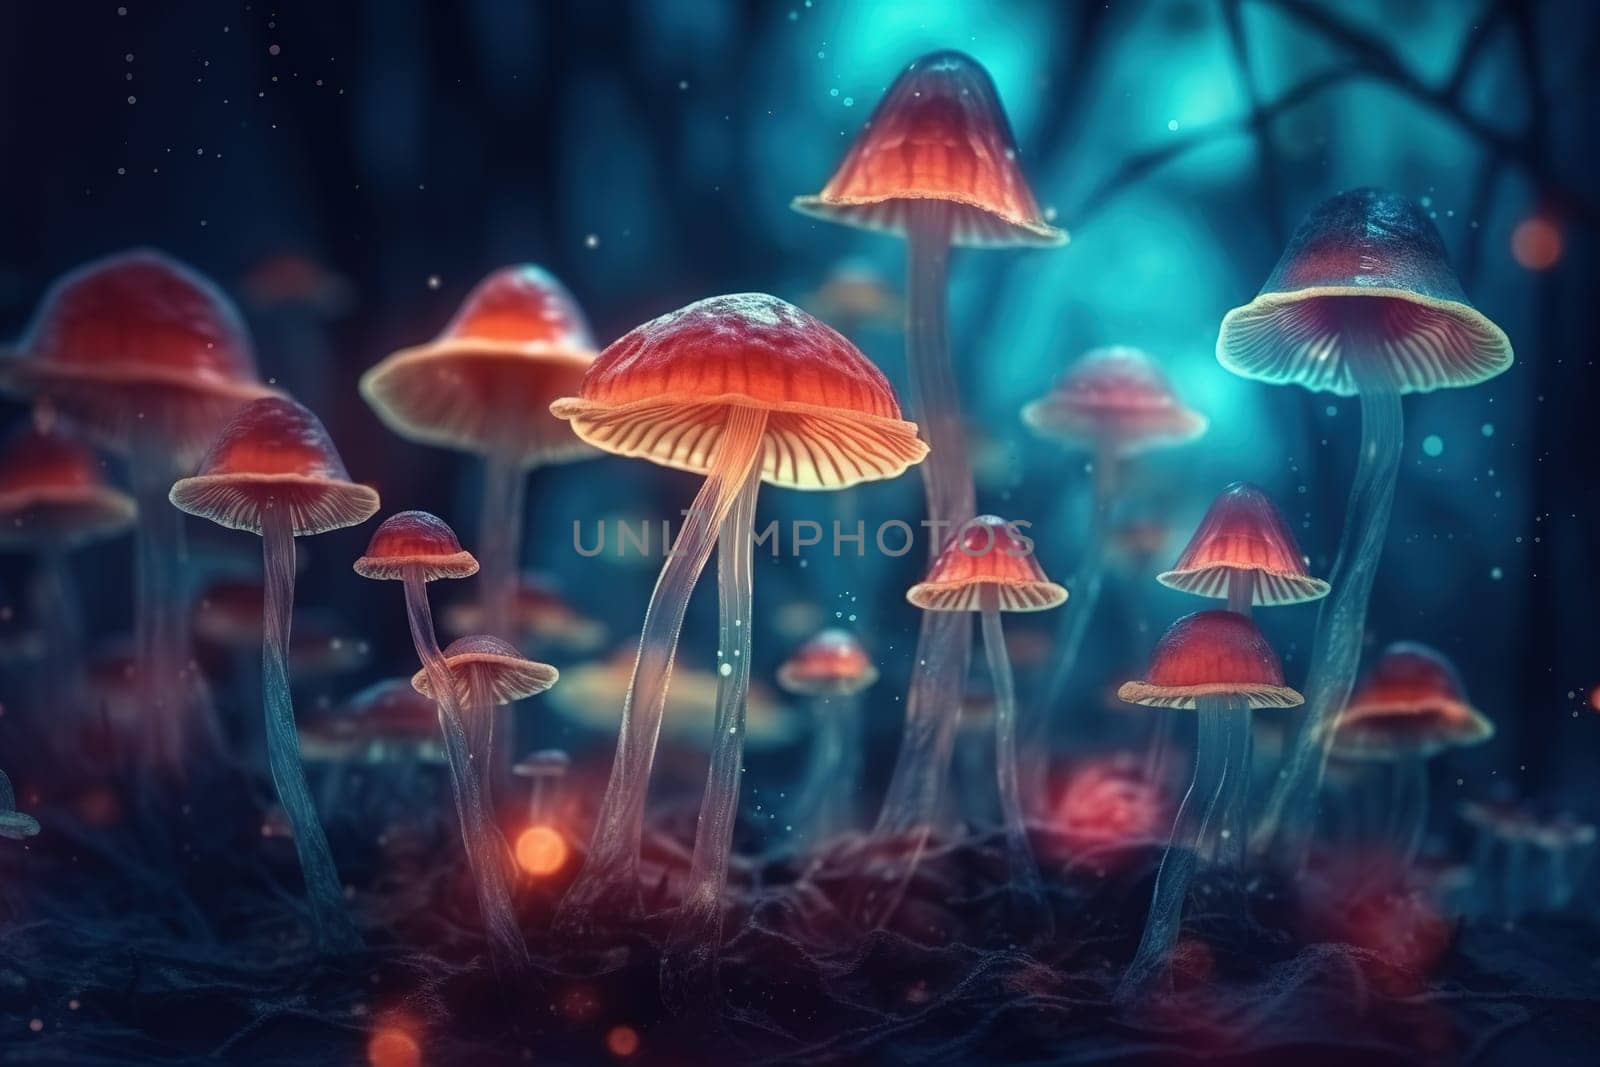 Neon illustration of magic mushrooms close-up by GekaSkr